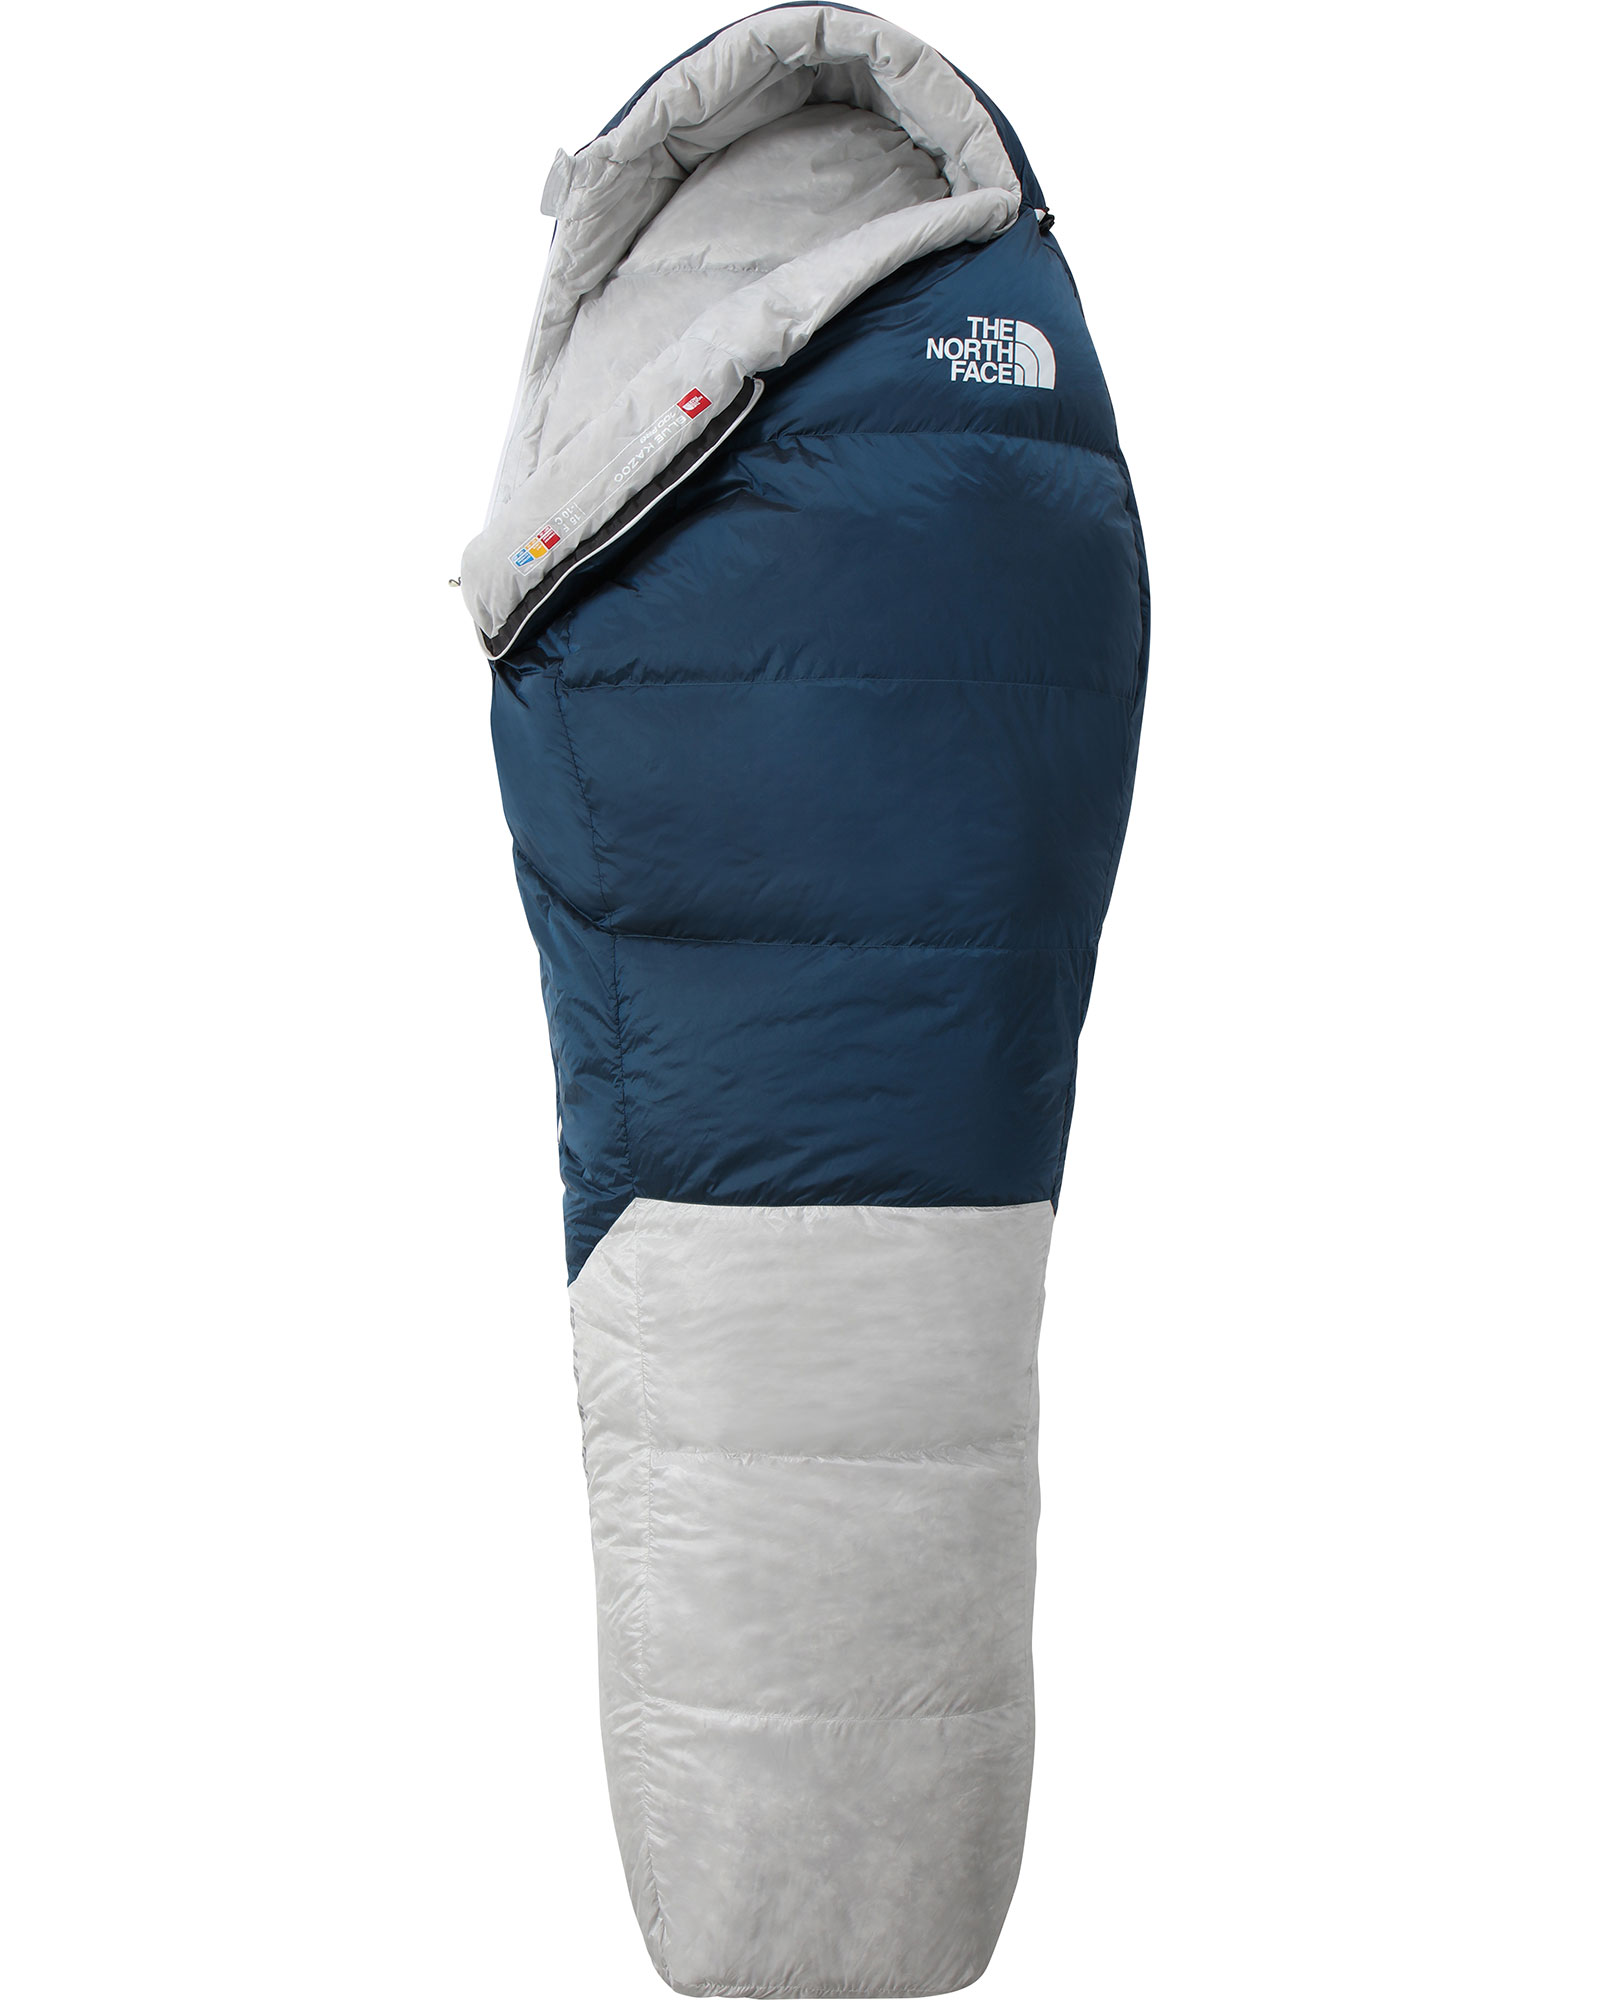 The North Face Blue Kazoo Regular Sleeping Bag - Banff Blue/Tin Grey Right Zip